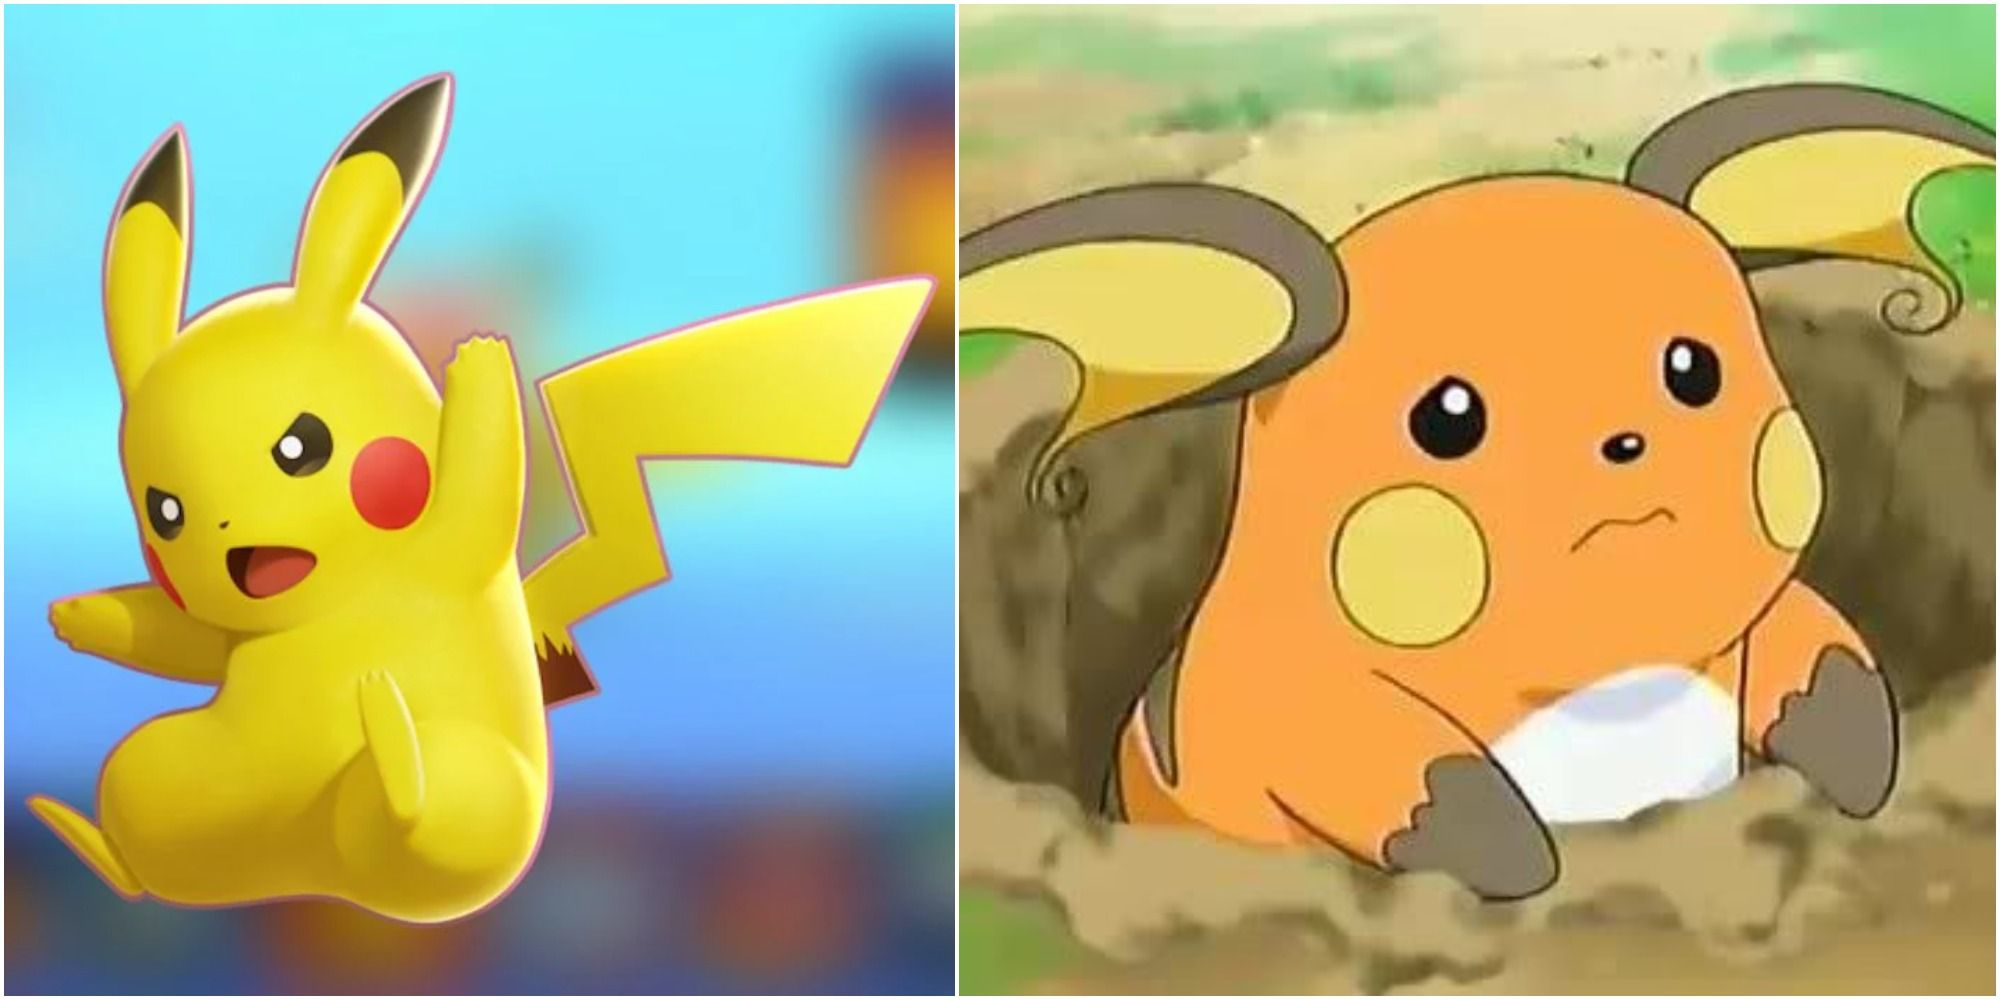  Pikachu From Pokemon Unite Next To A Saddened Raichu Form The Anime 